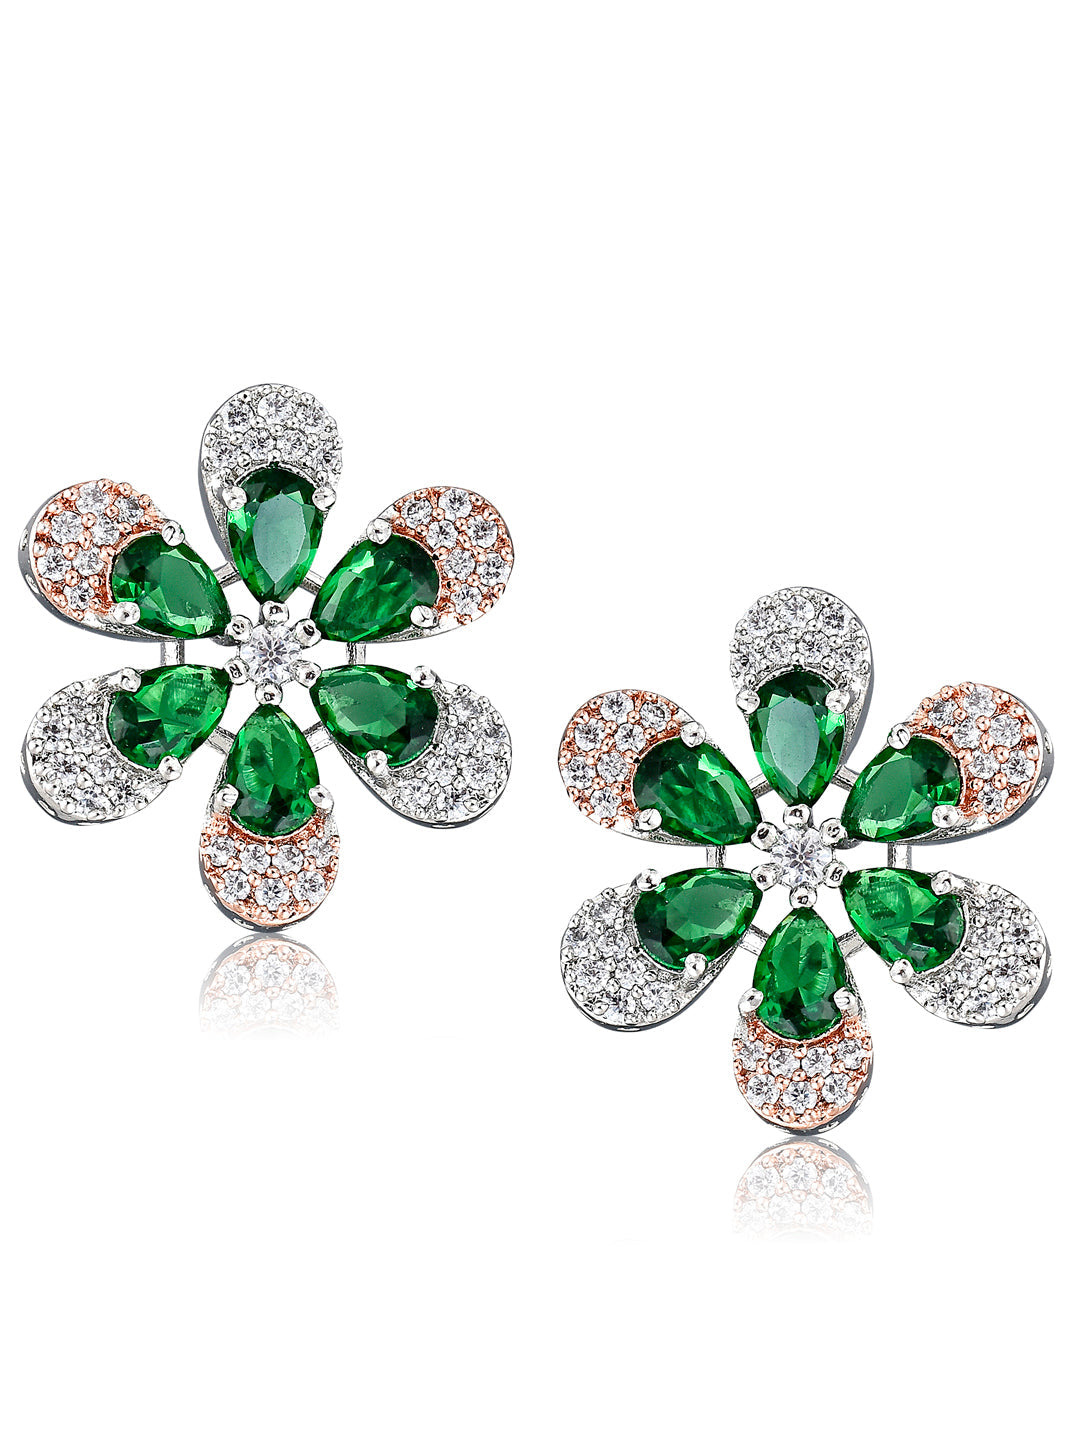 Cubic Zirconia Emerald Green Floral Stud Earrings 